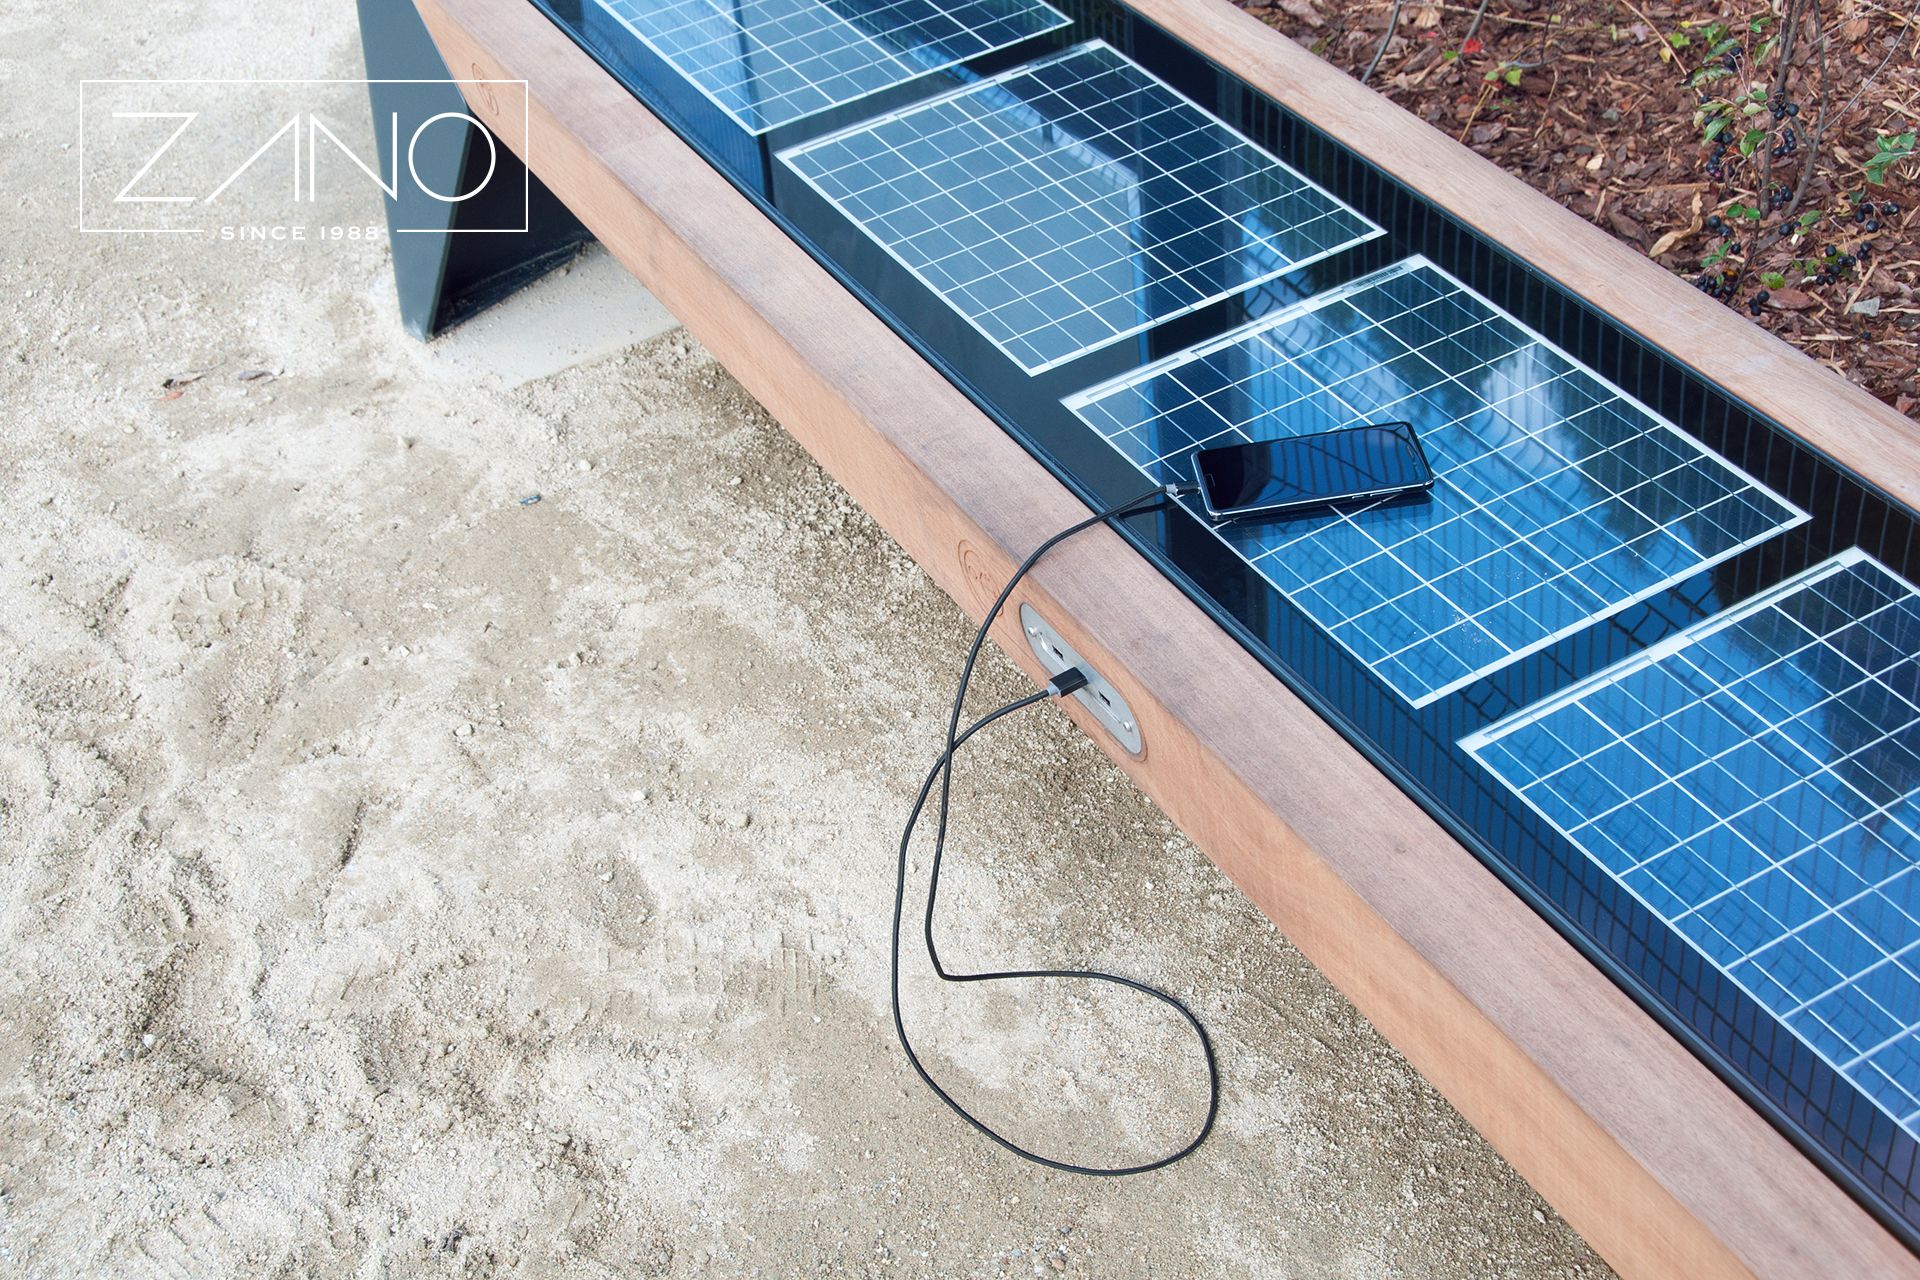 Panchina Photon | Panchina solare con pannelli fotovoltaici